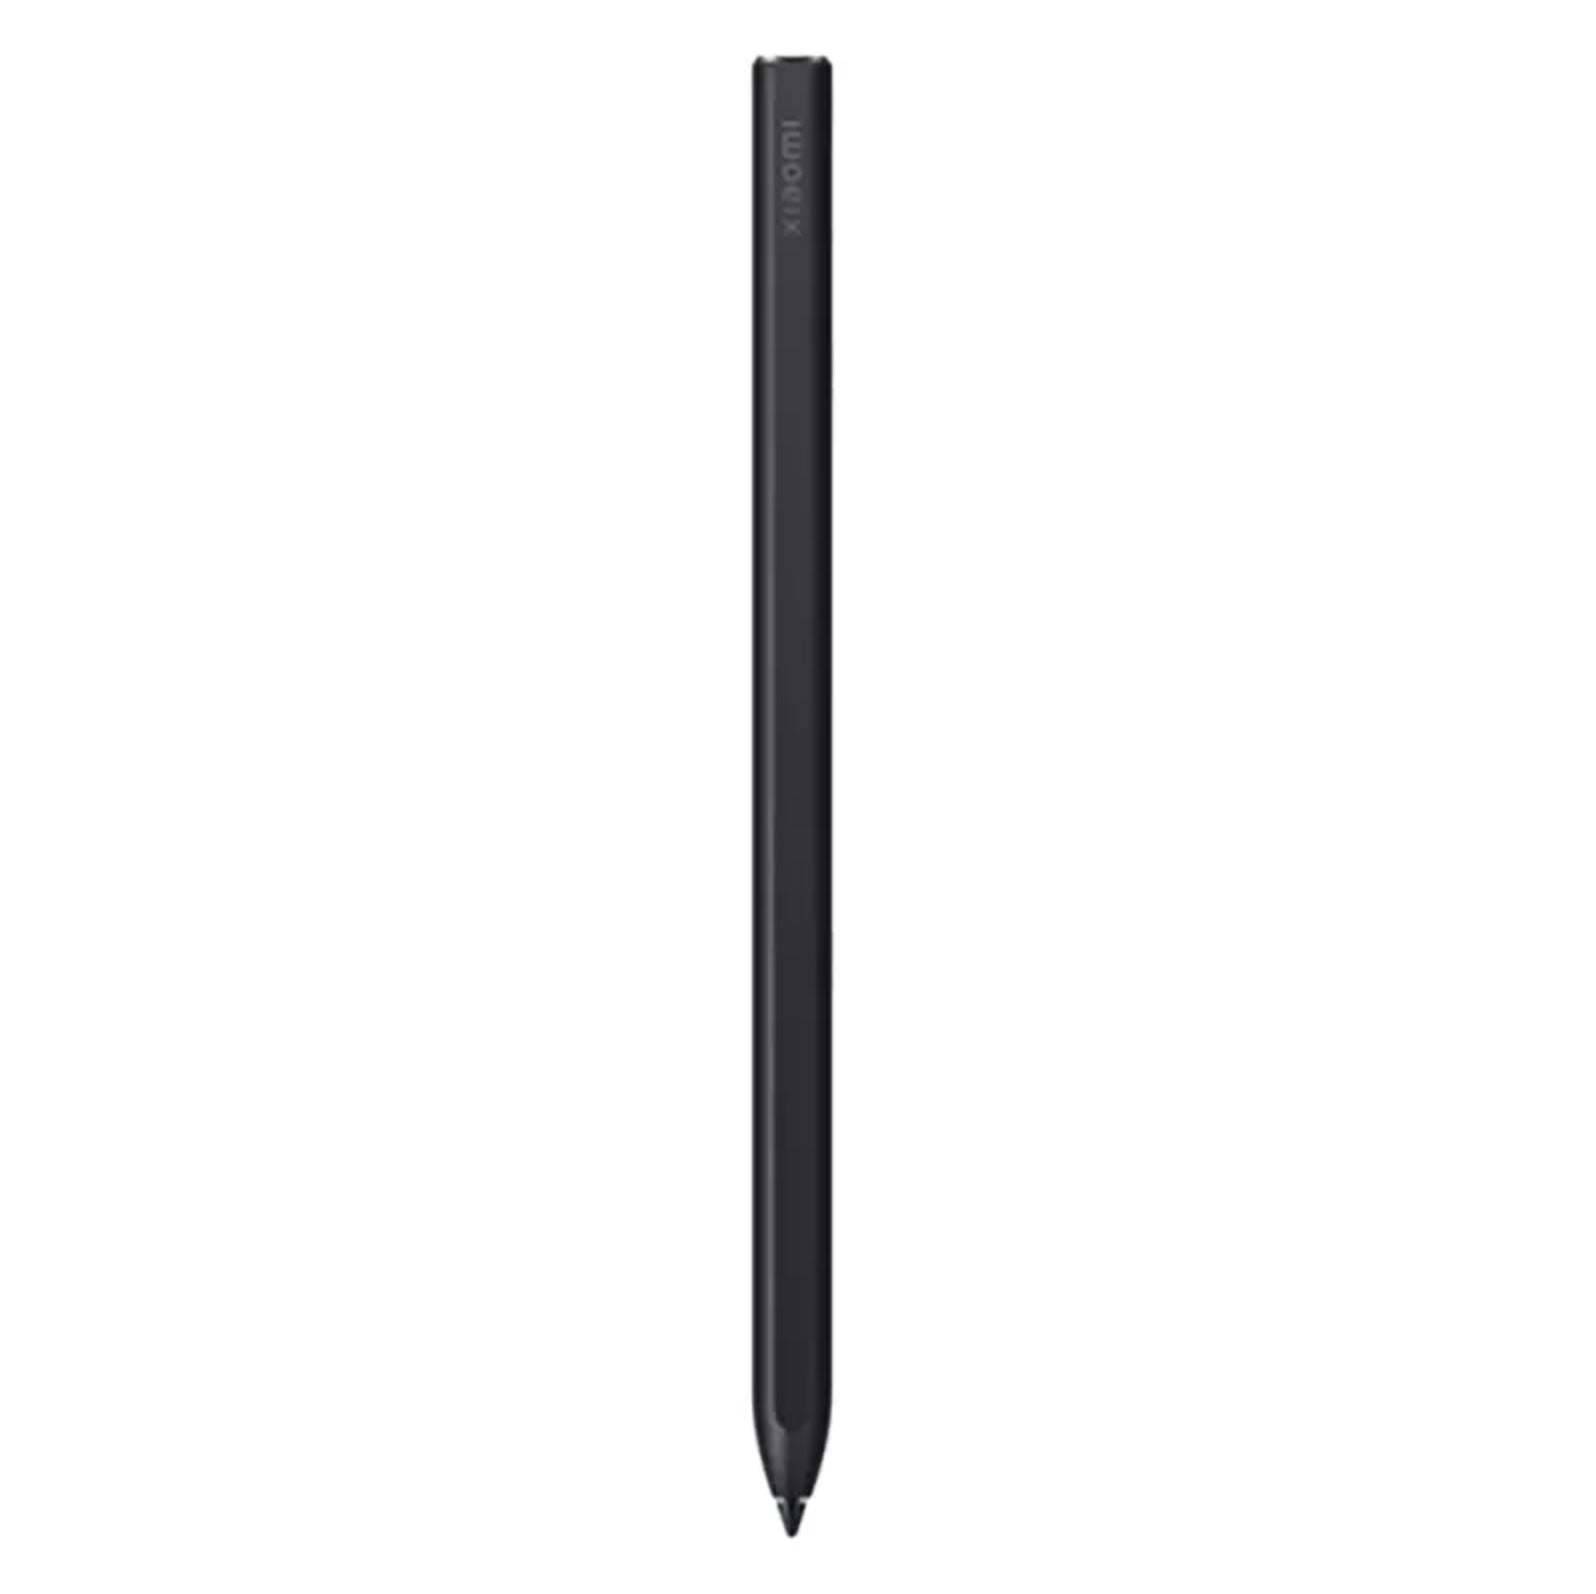 Original Xiaomi Stylus Pen for Xiaomi Mi Pad 5/5 Pro Tablet PC - 95% New